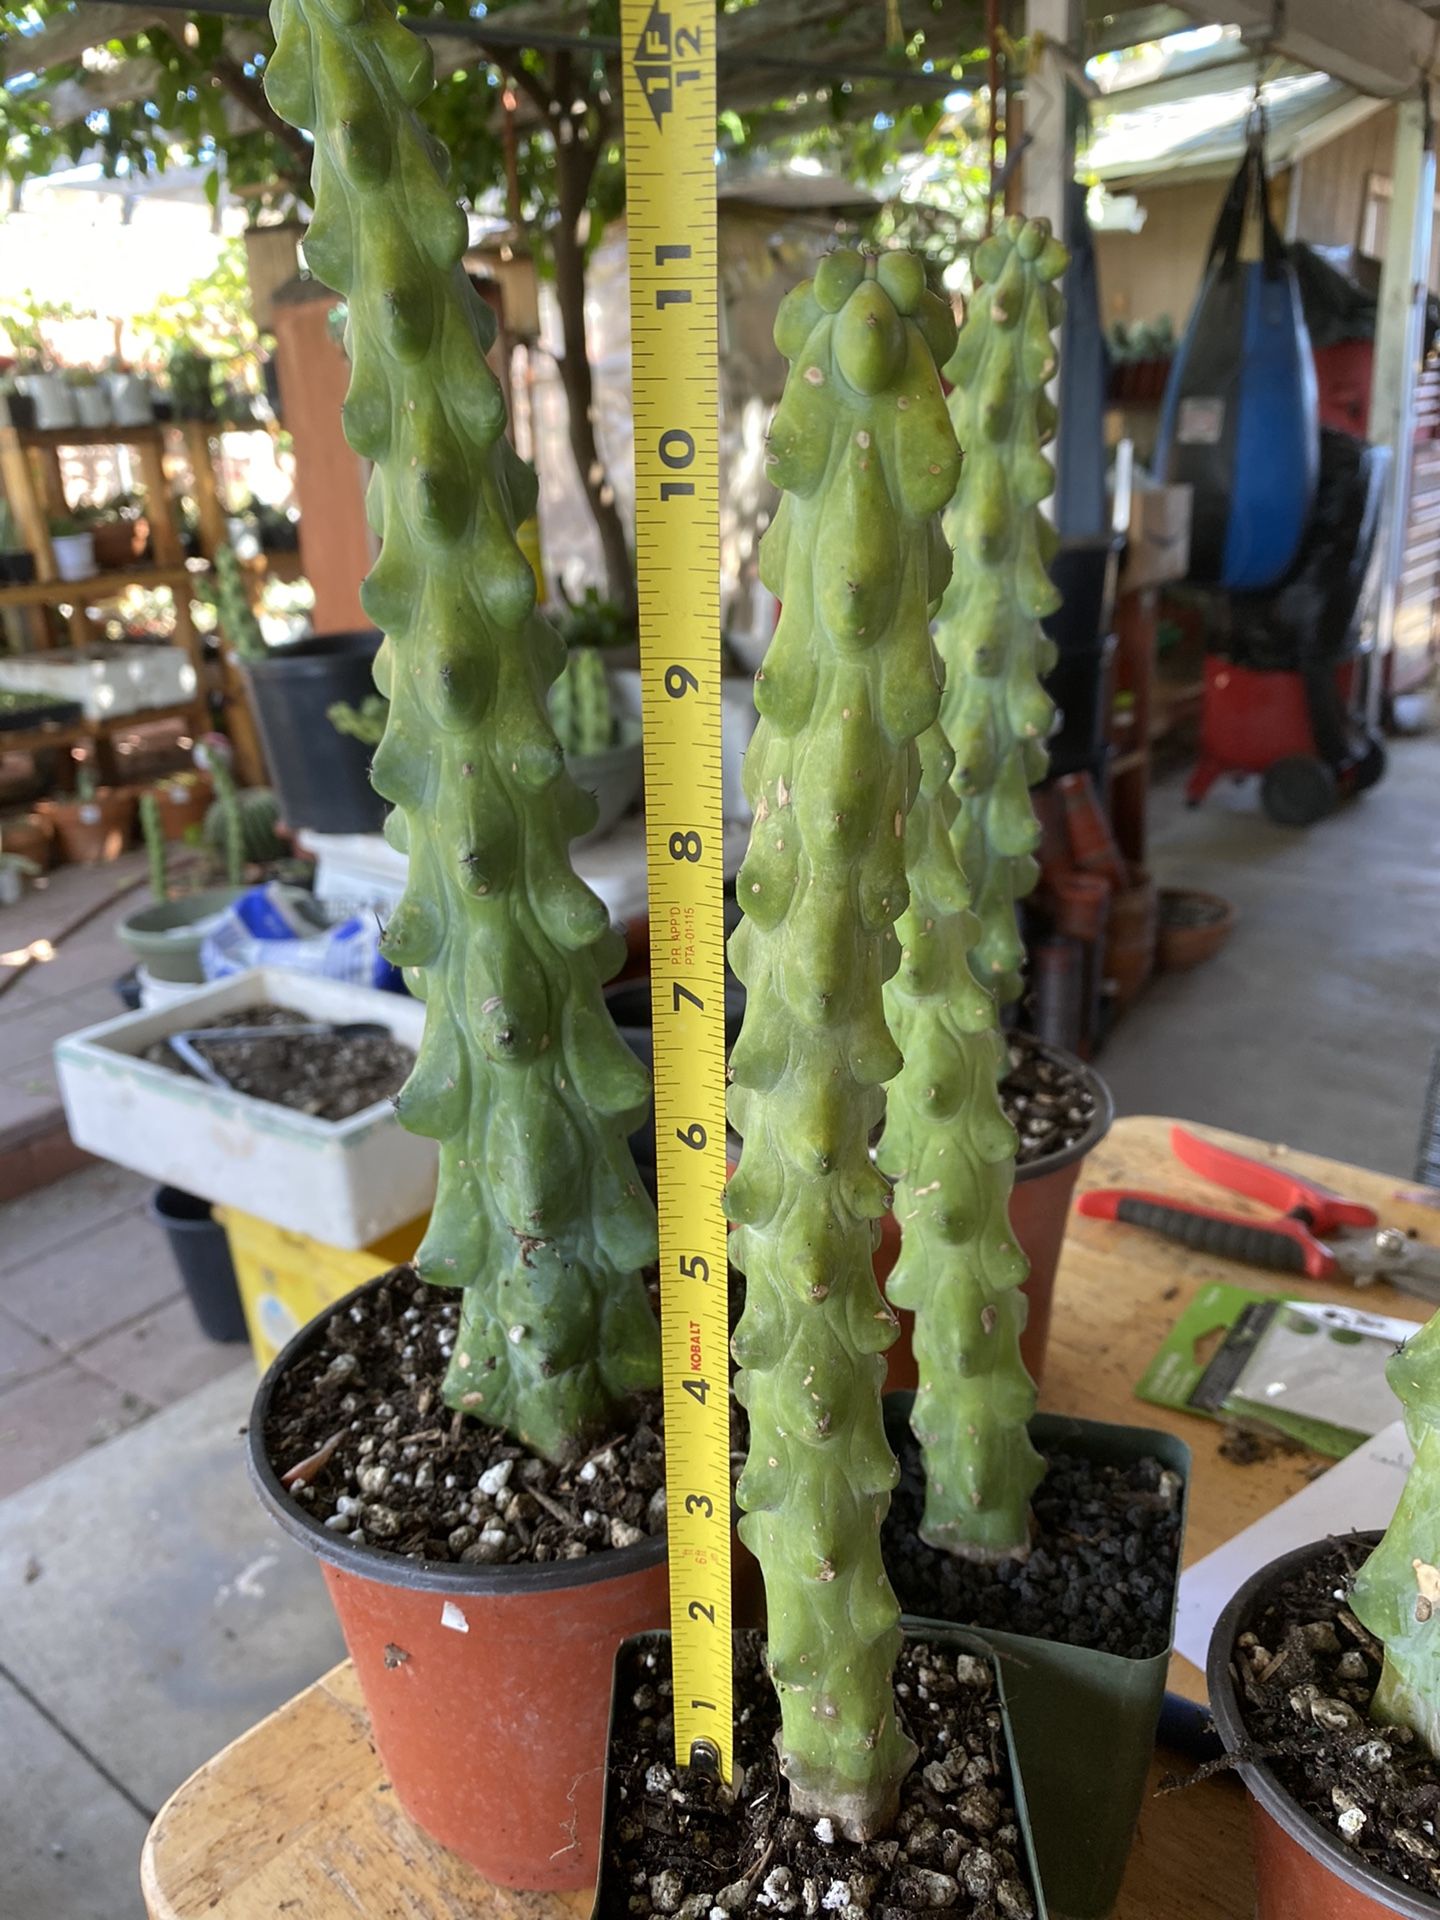 1 myrtillocactus skinny shape.11” tall